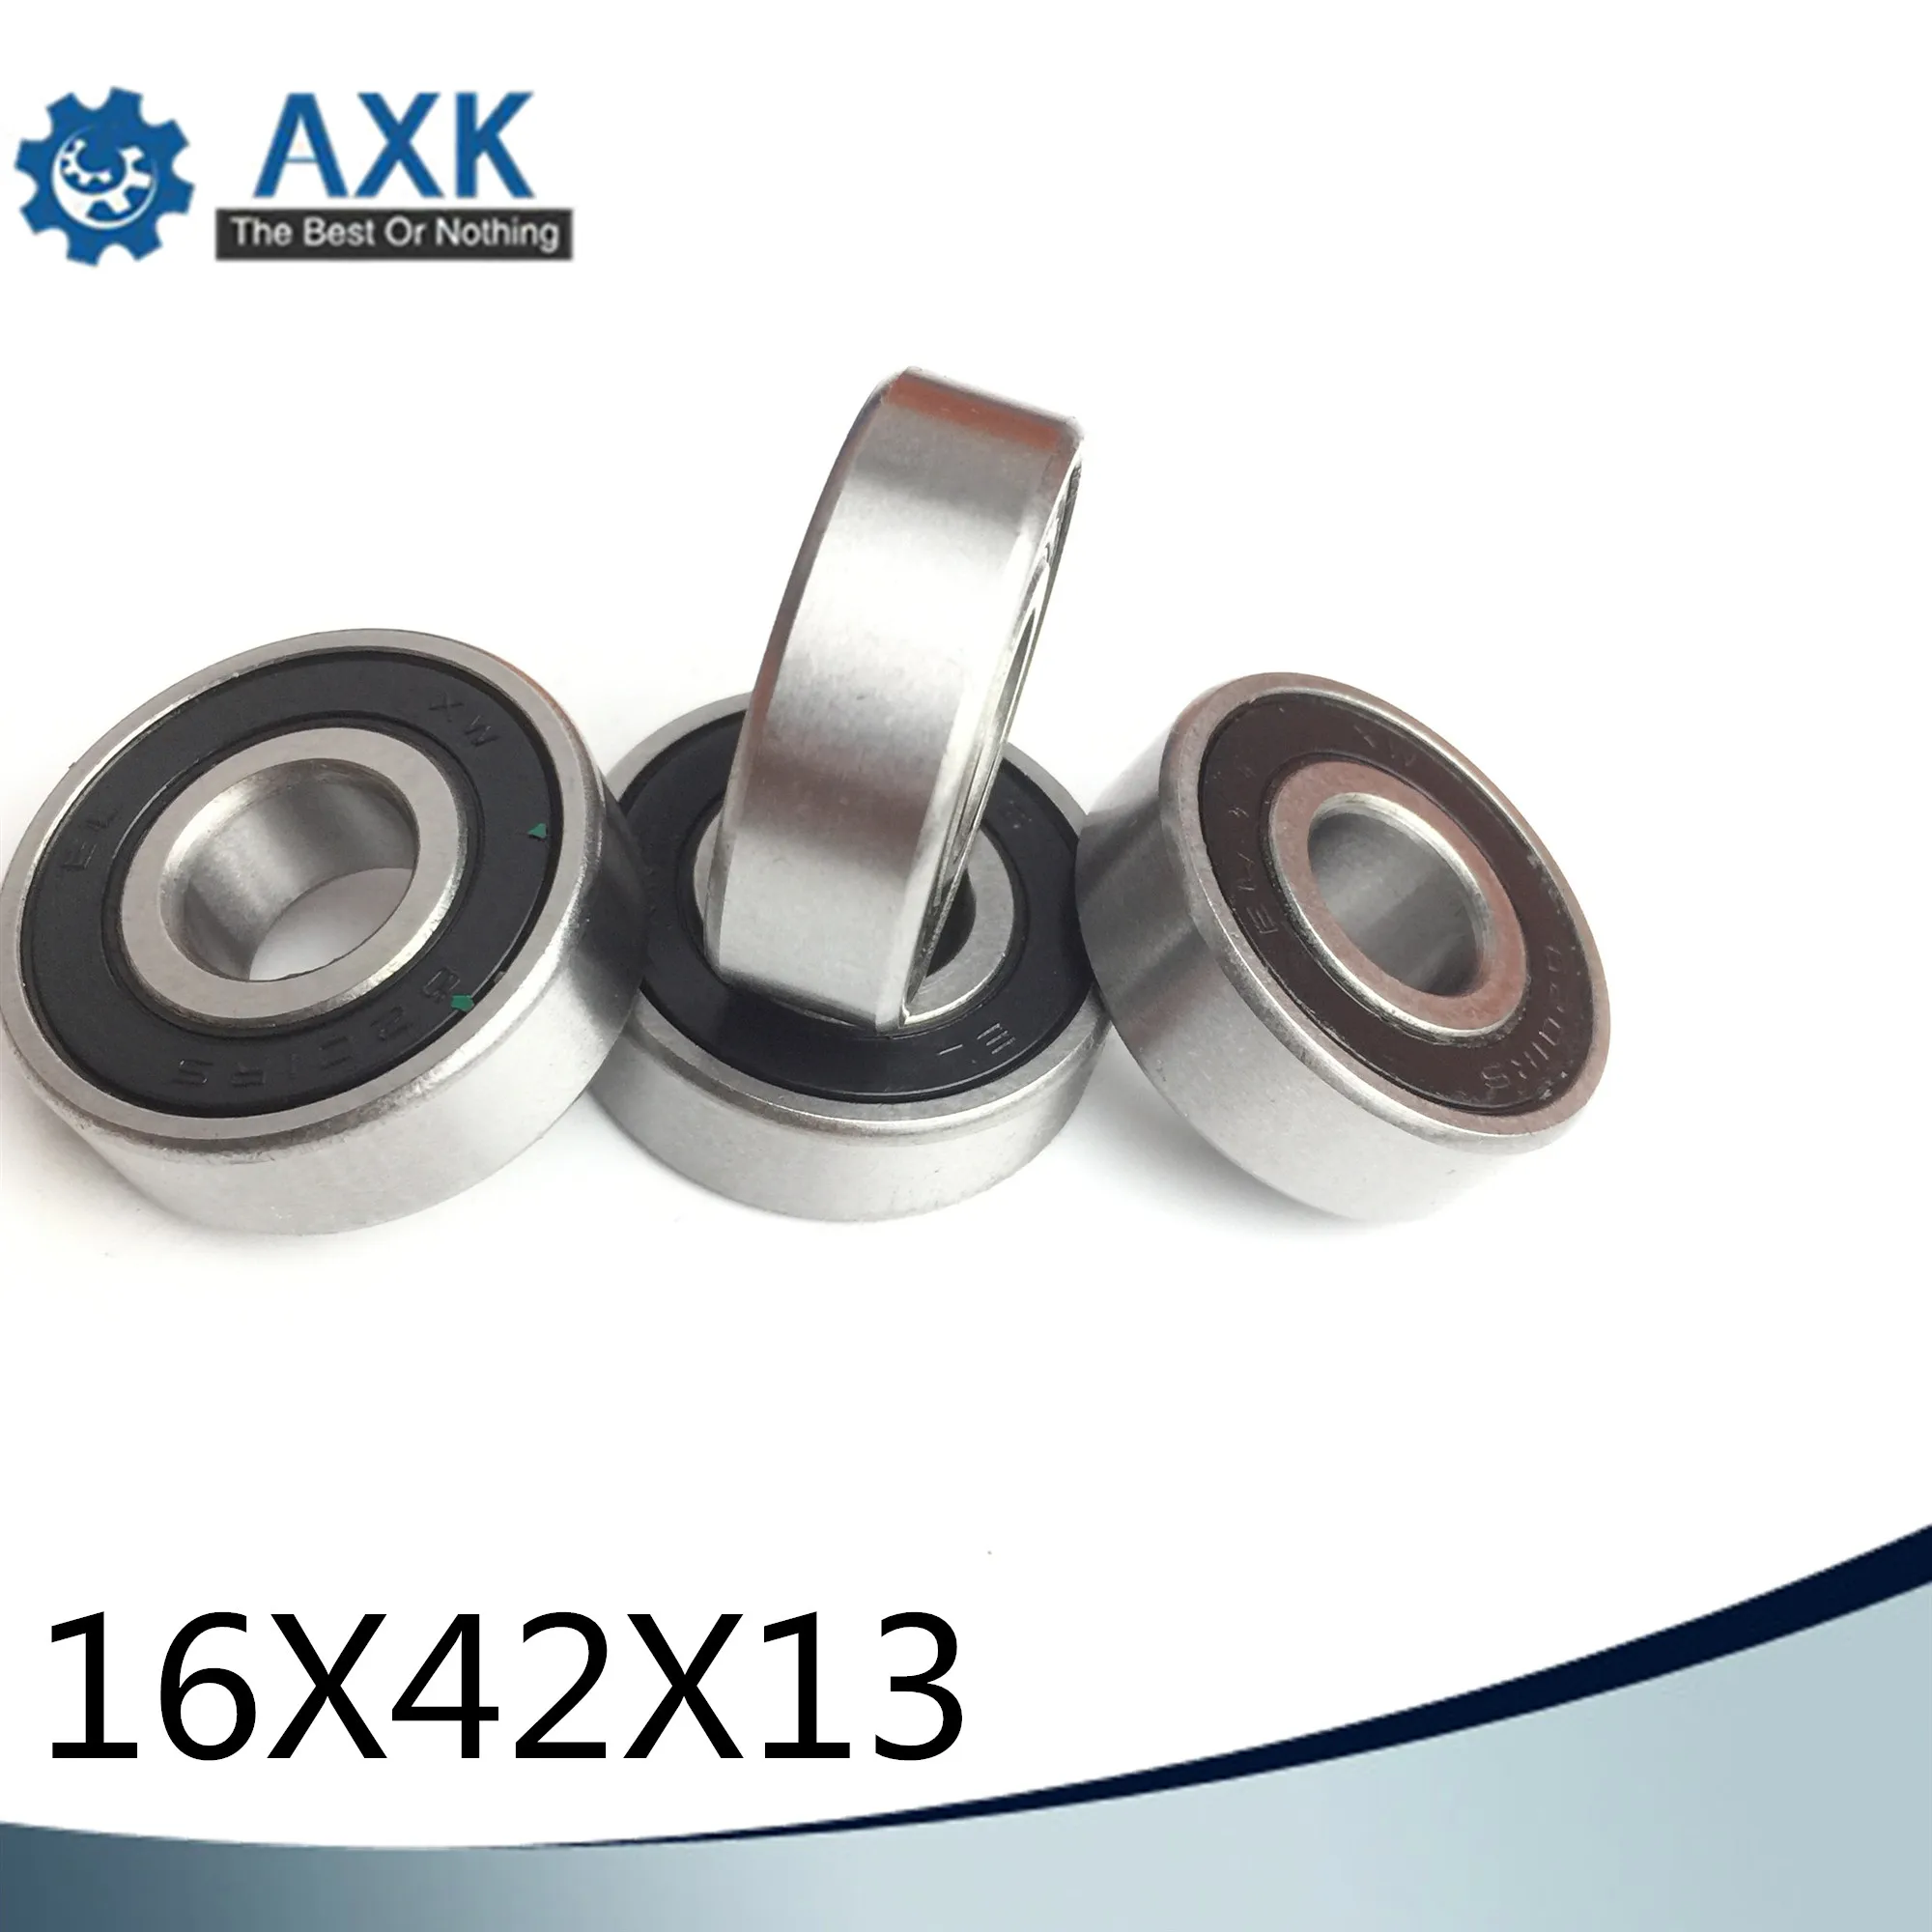 164213 Non-standard Ball Bearings ( 1 PC ) 16*42*13 mm